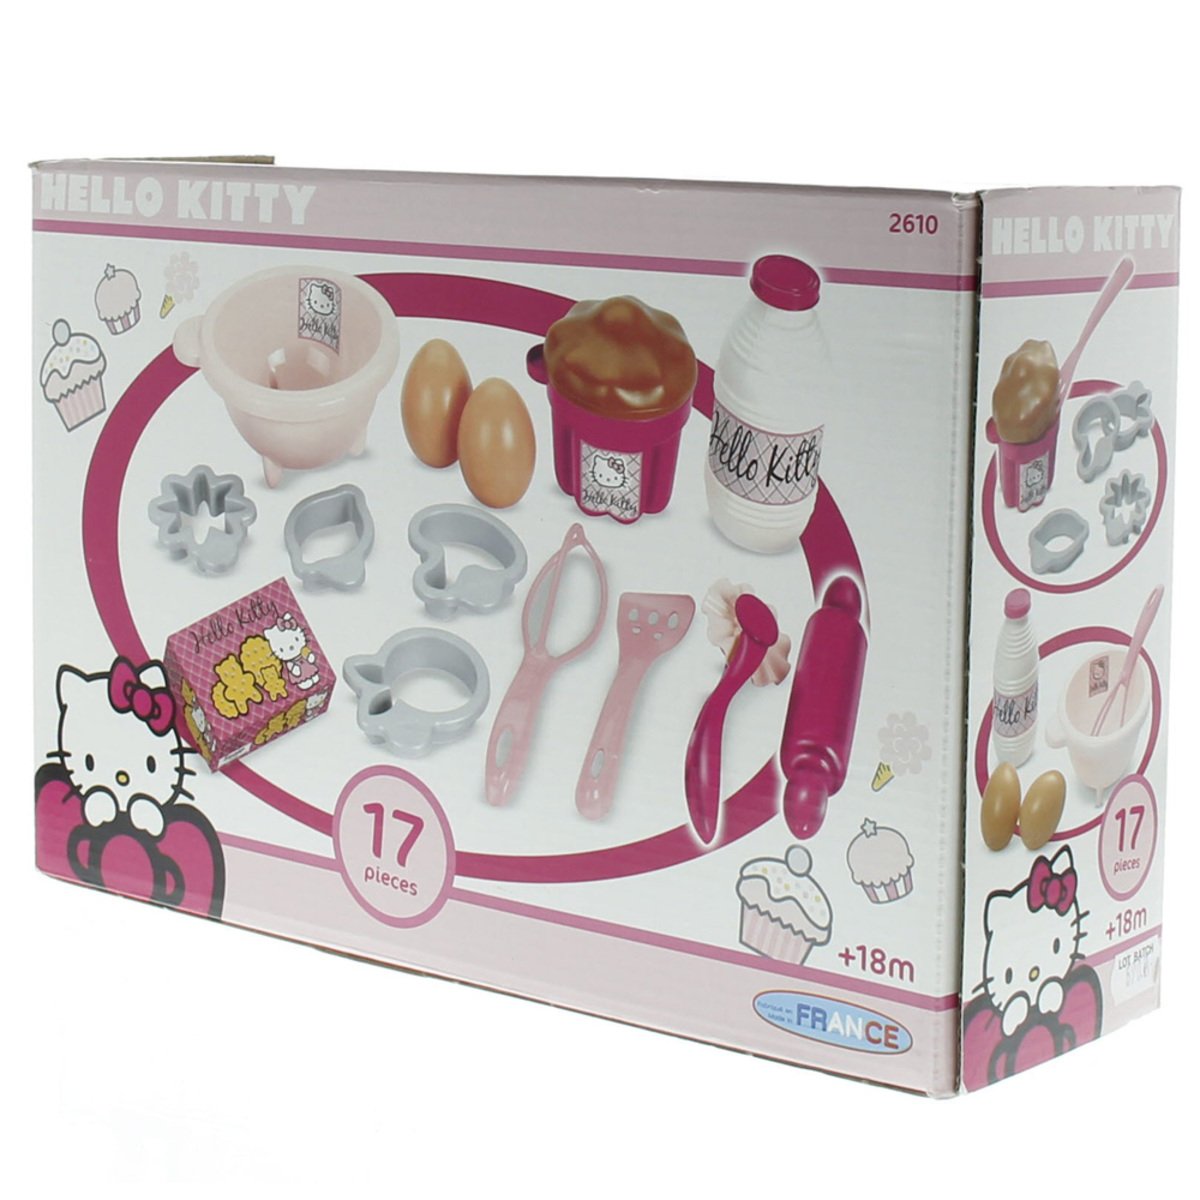 Hello Kitty Pastry Set